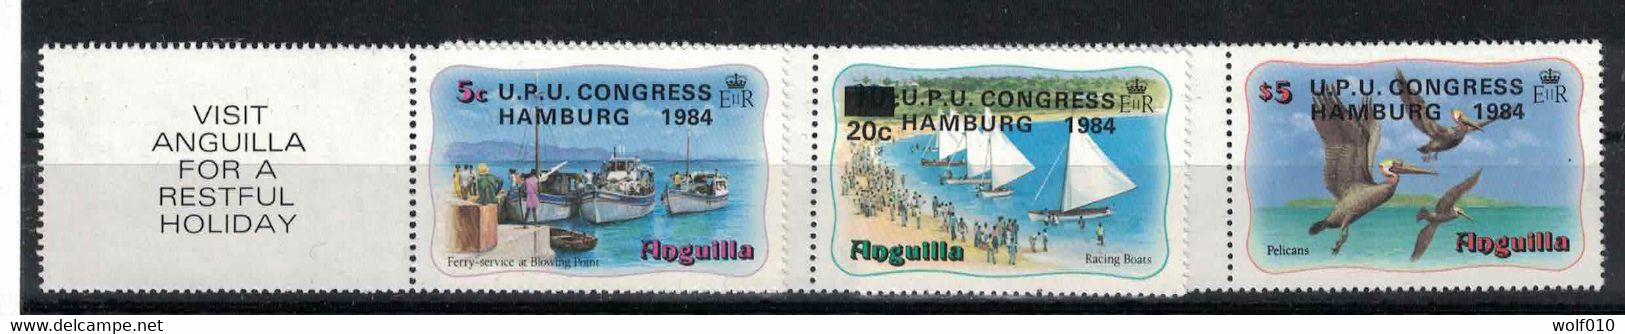 Anguilla. 1984. UPU Congress. MNH Set. SCV = 7.65 - Pelikane